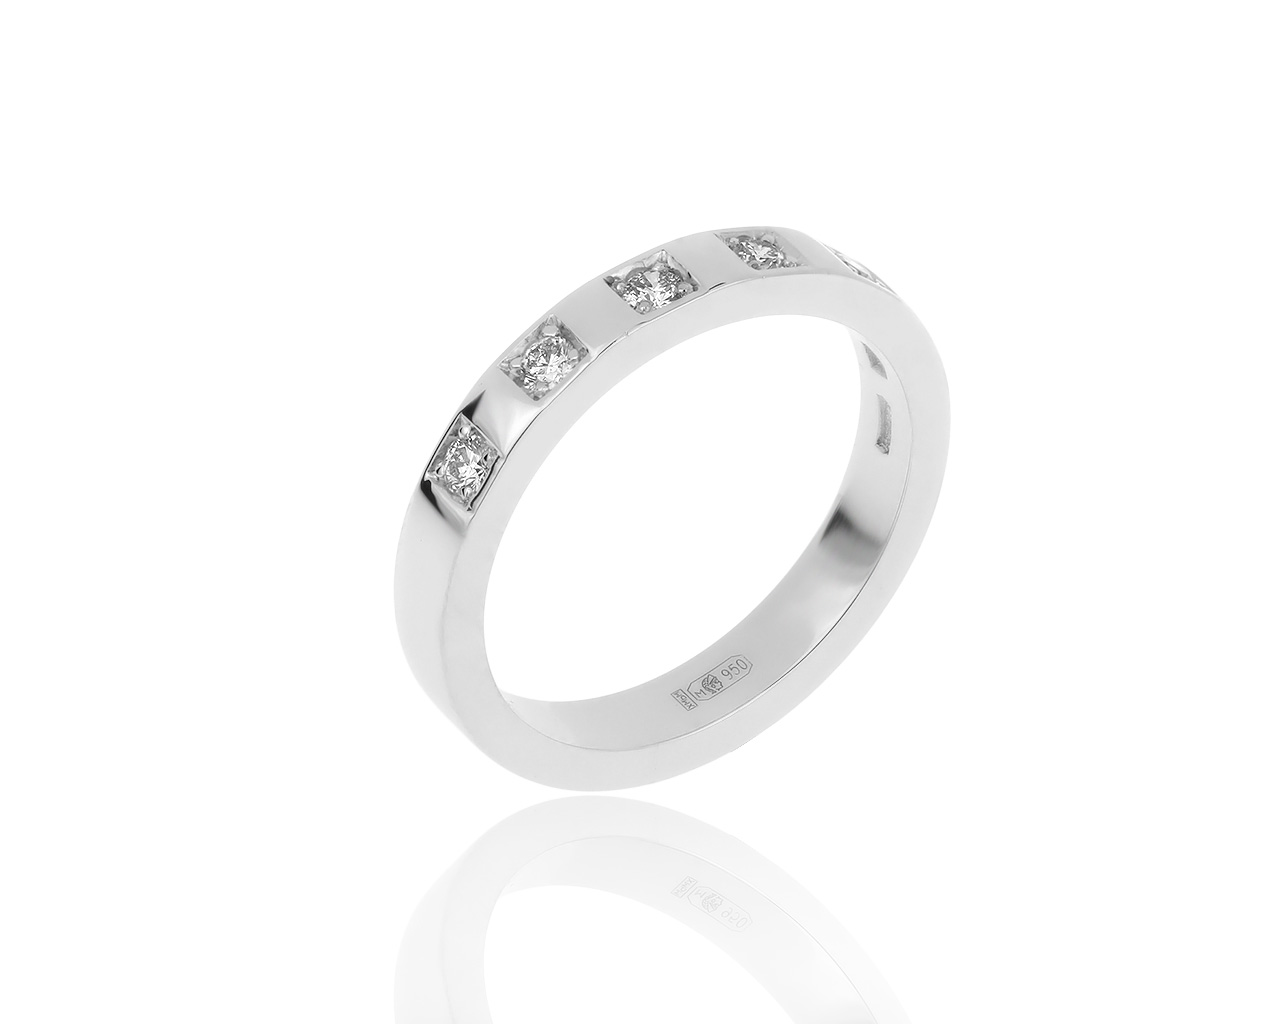 Оригинальное платиновое кольцо с бриллиантами 0.15ct Bvlgari